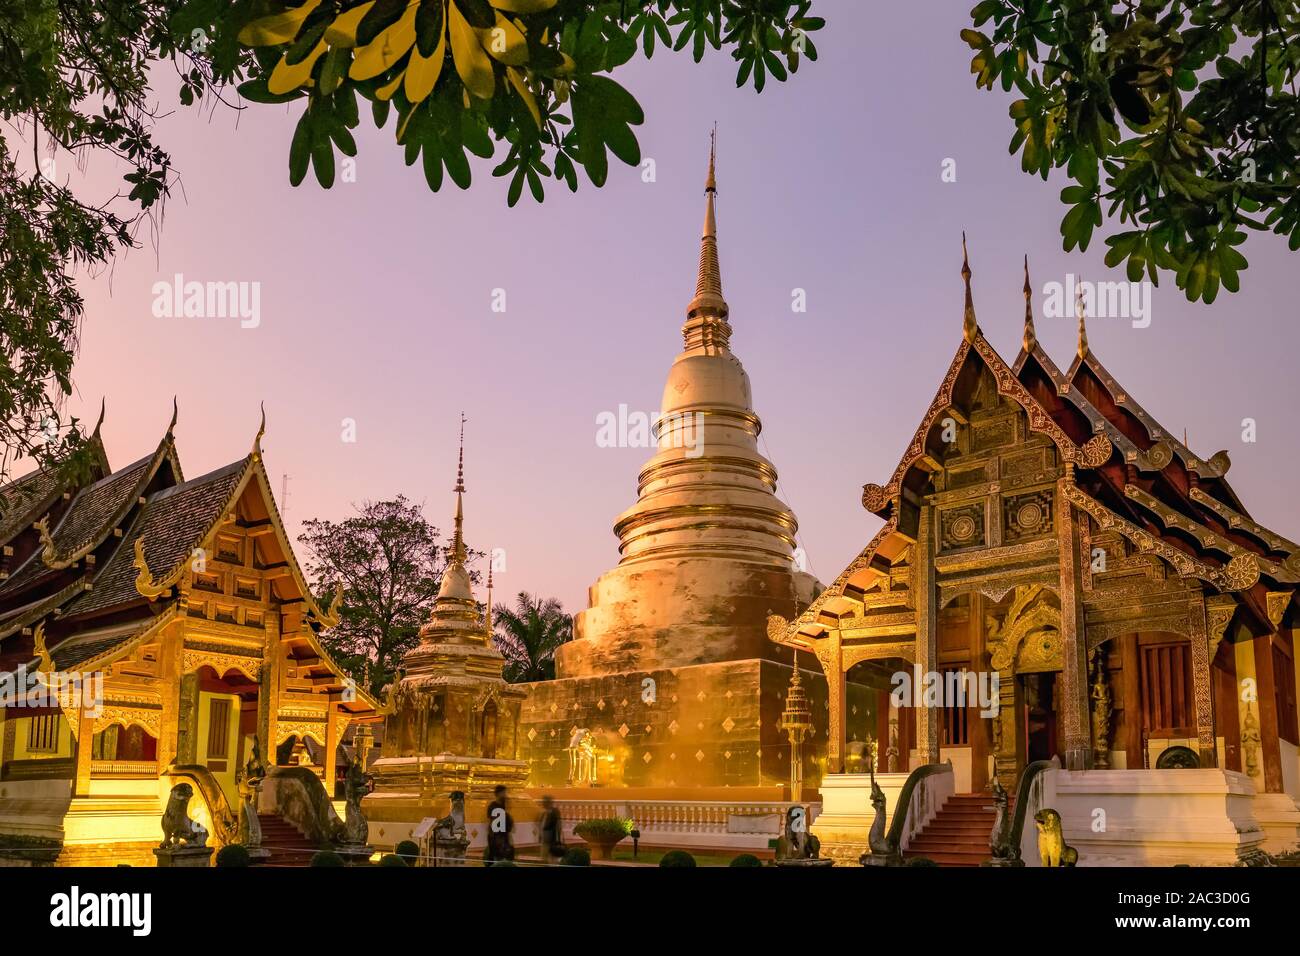 Wat Phra Singh in Chiang Mai, Thailand Stock Photo